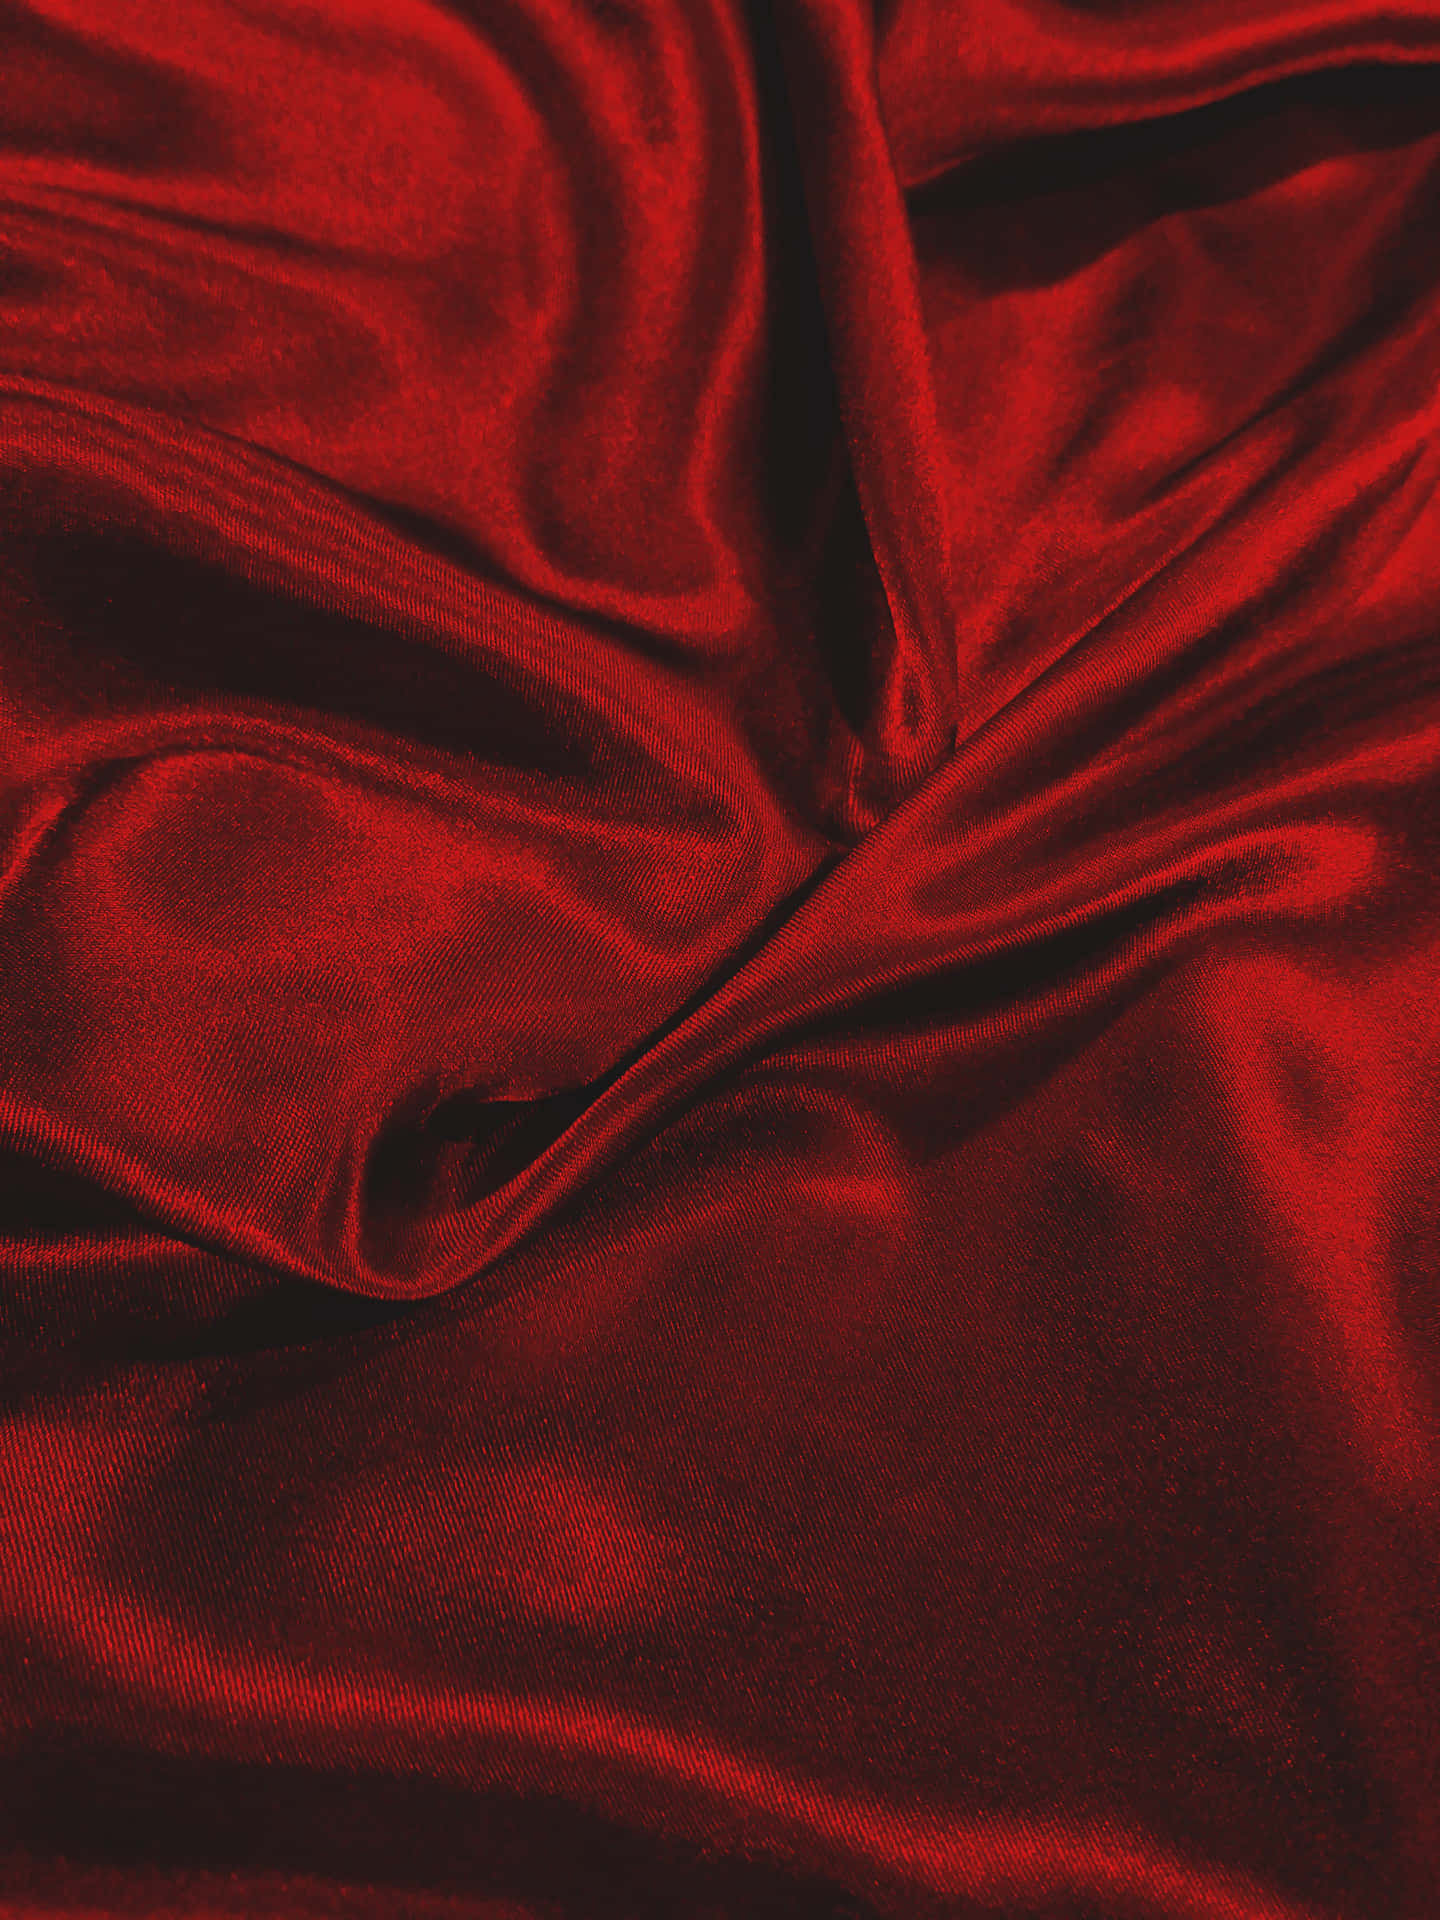 Red Velvet Satin Fabric Color Background